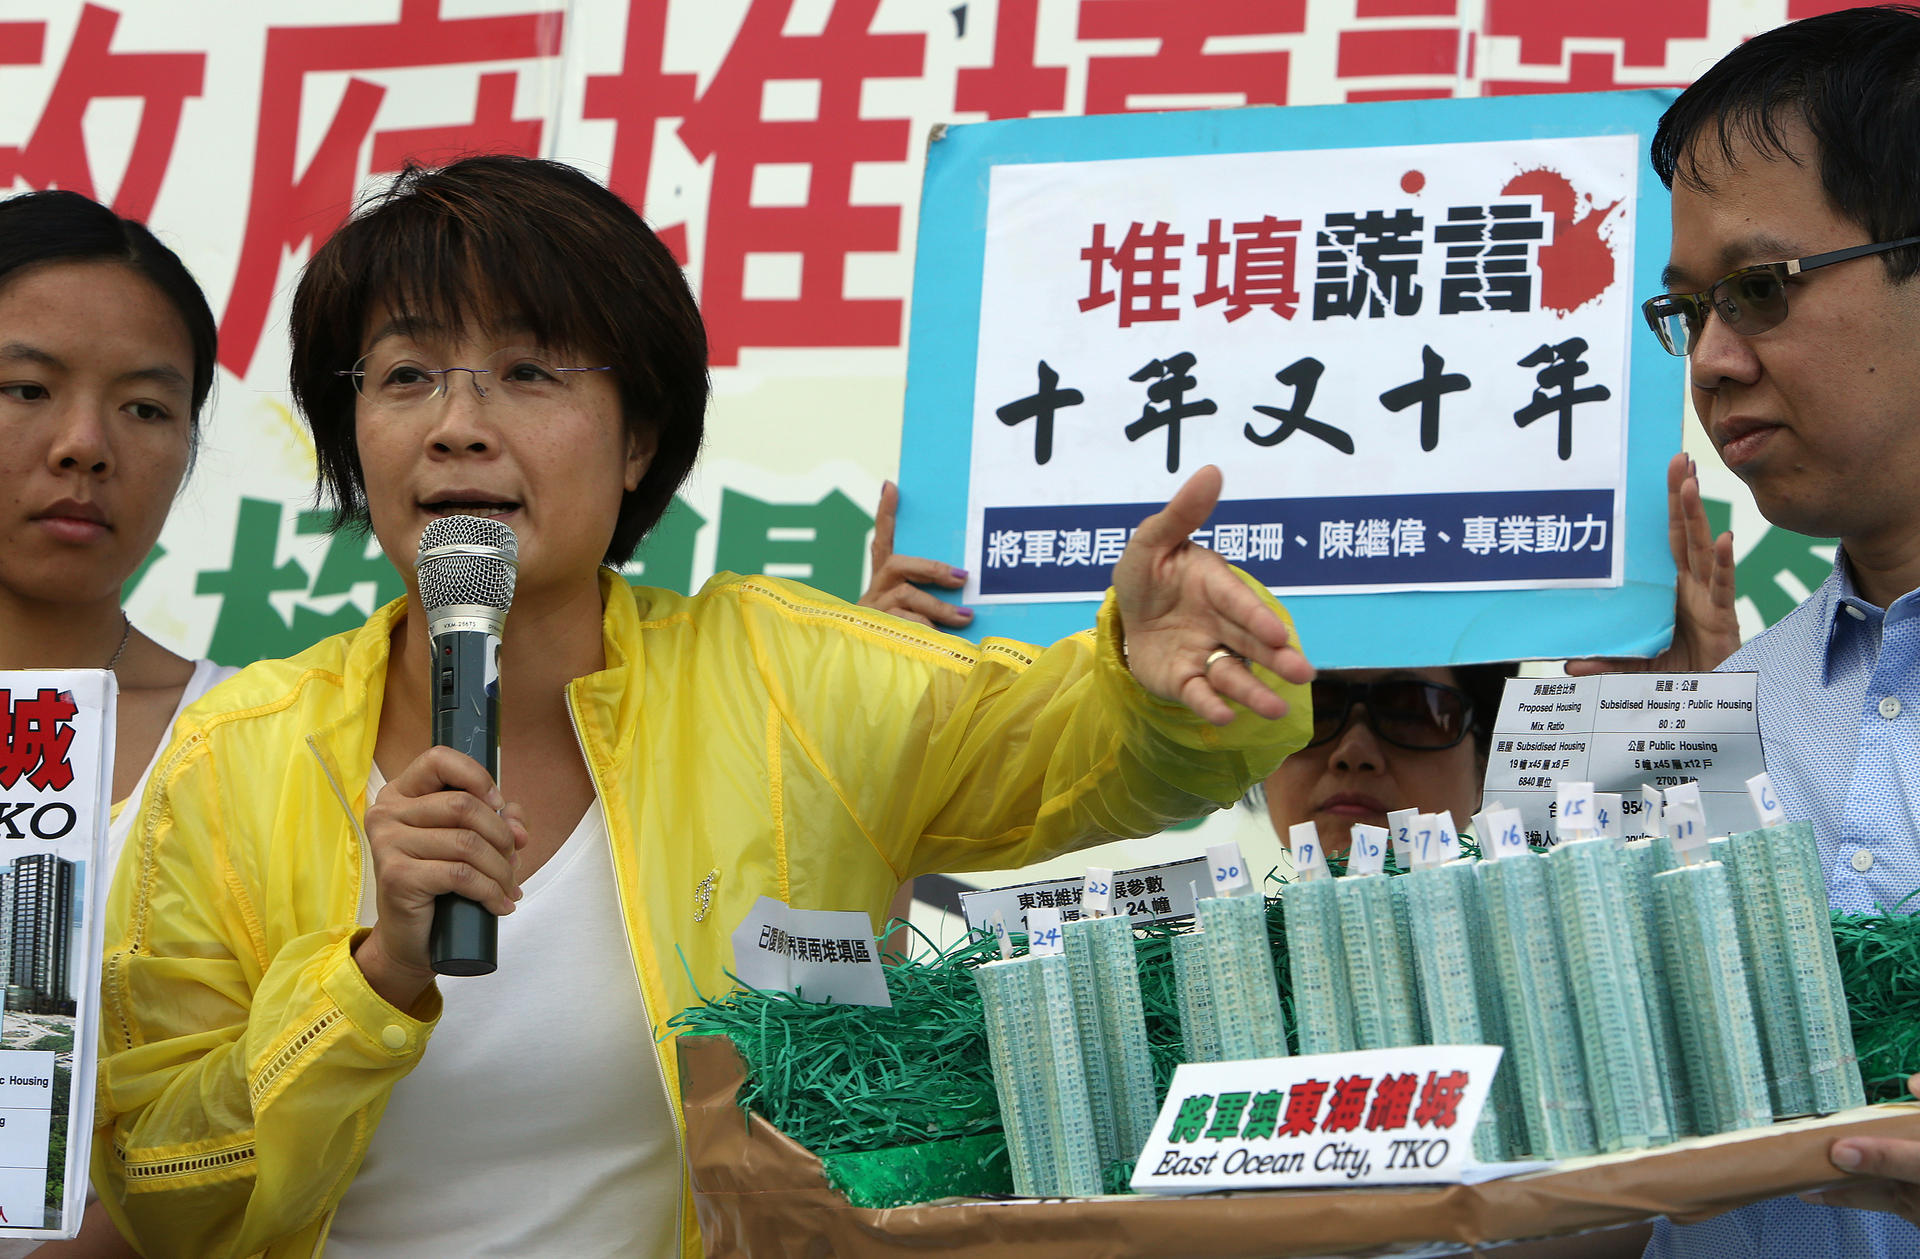 A protest over the landfill in Tseung Kwan O. Photo: Nora Tam